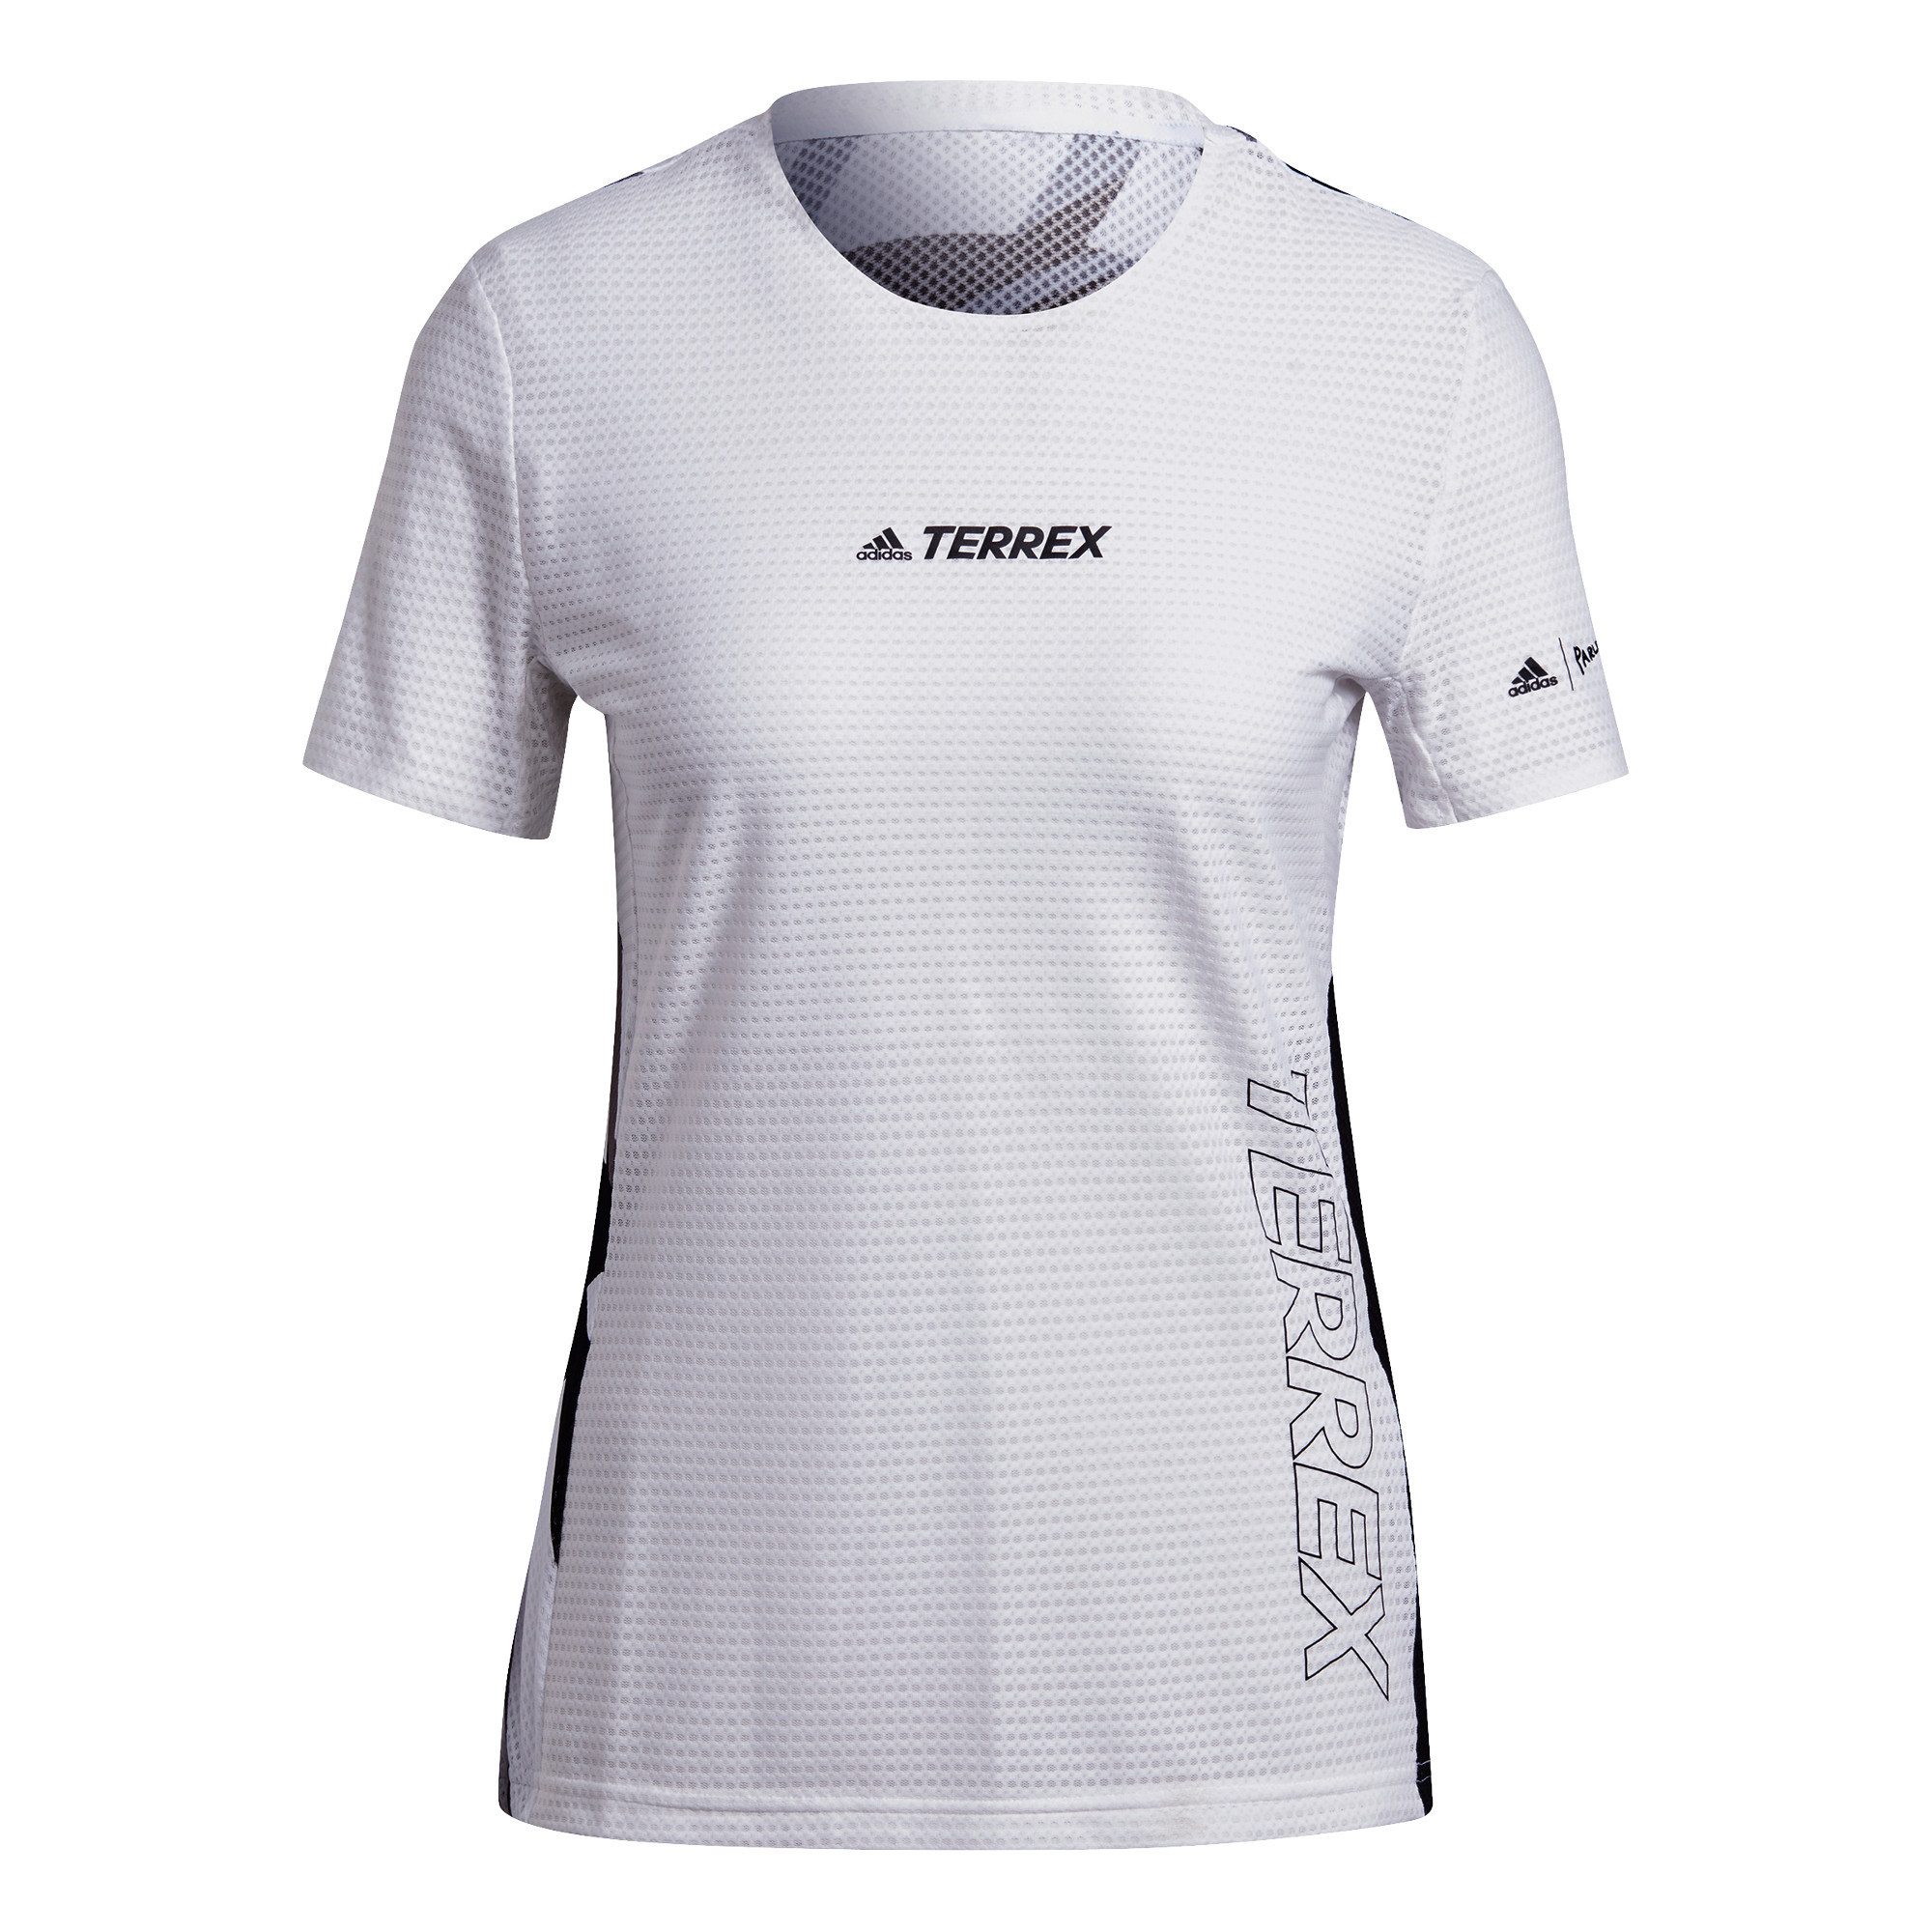 Adidas Women's Terrex Parley Agravic TR Pro T-shirt WHITE/BLACK XS, WHITE/BLACK